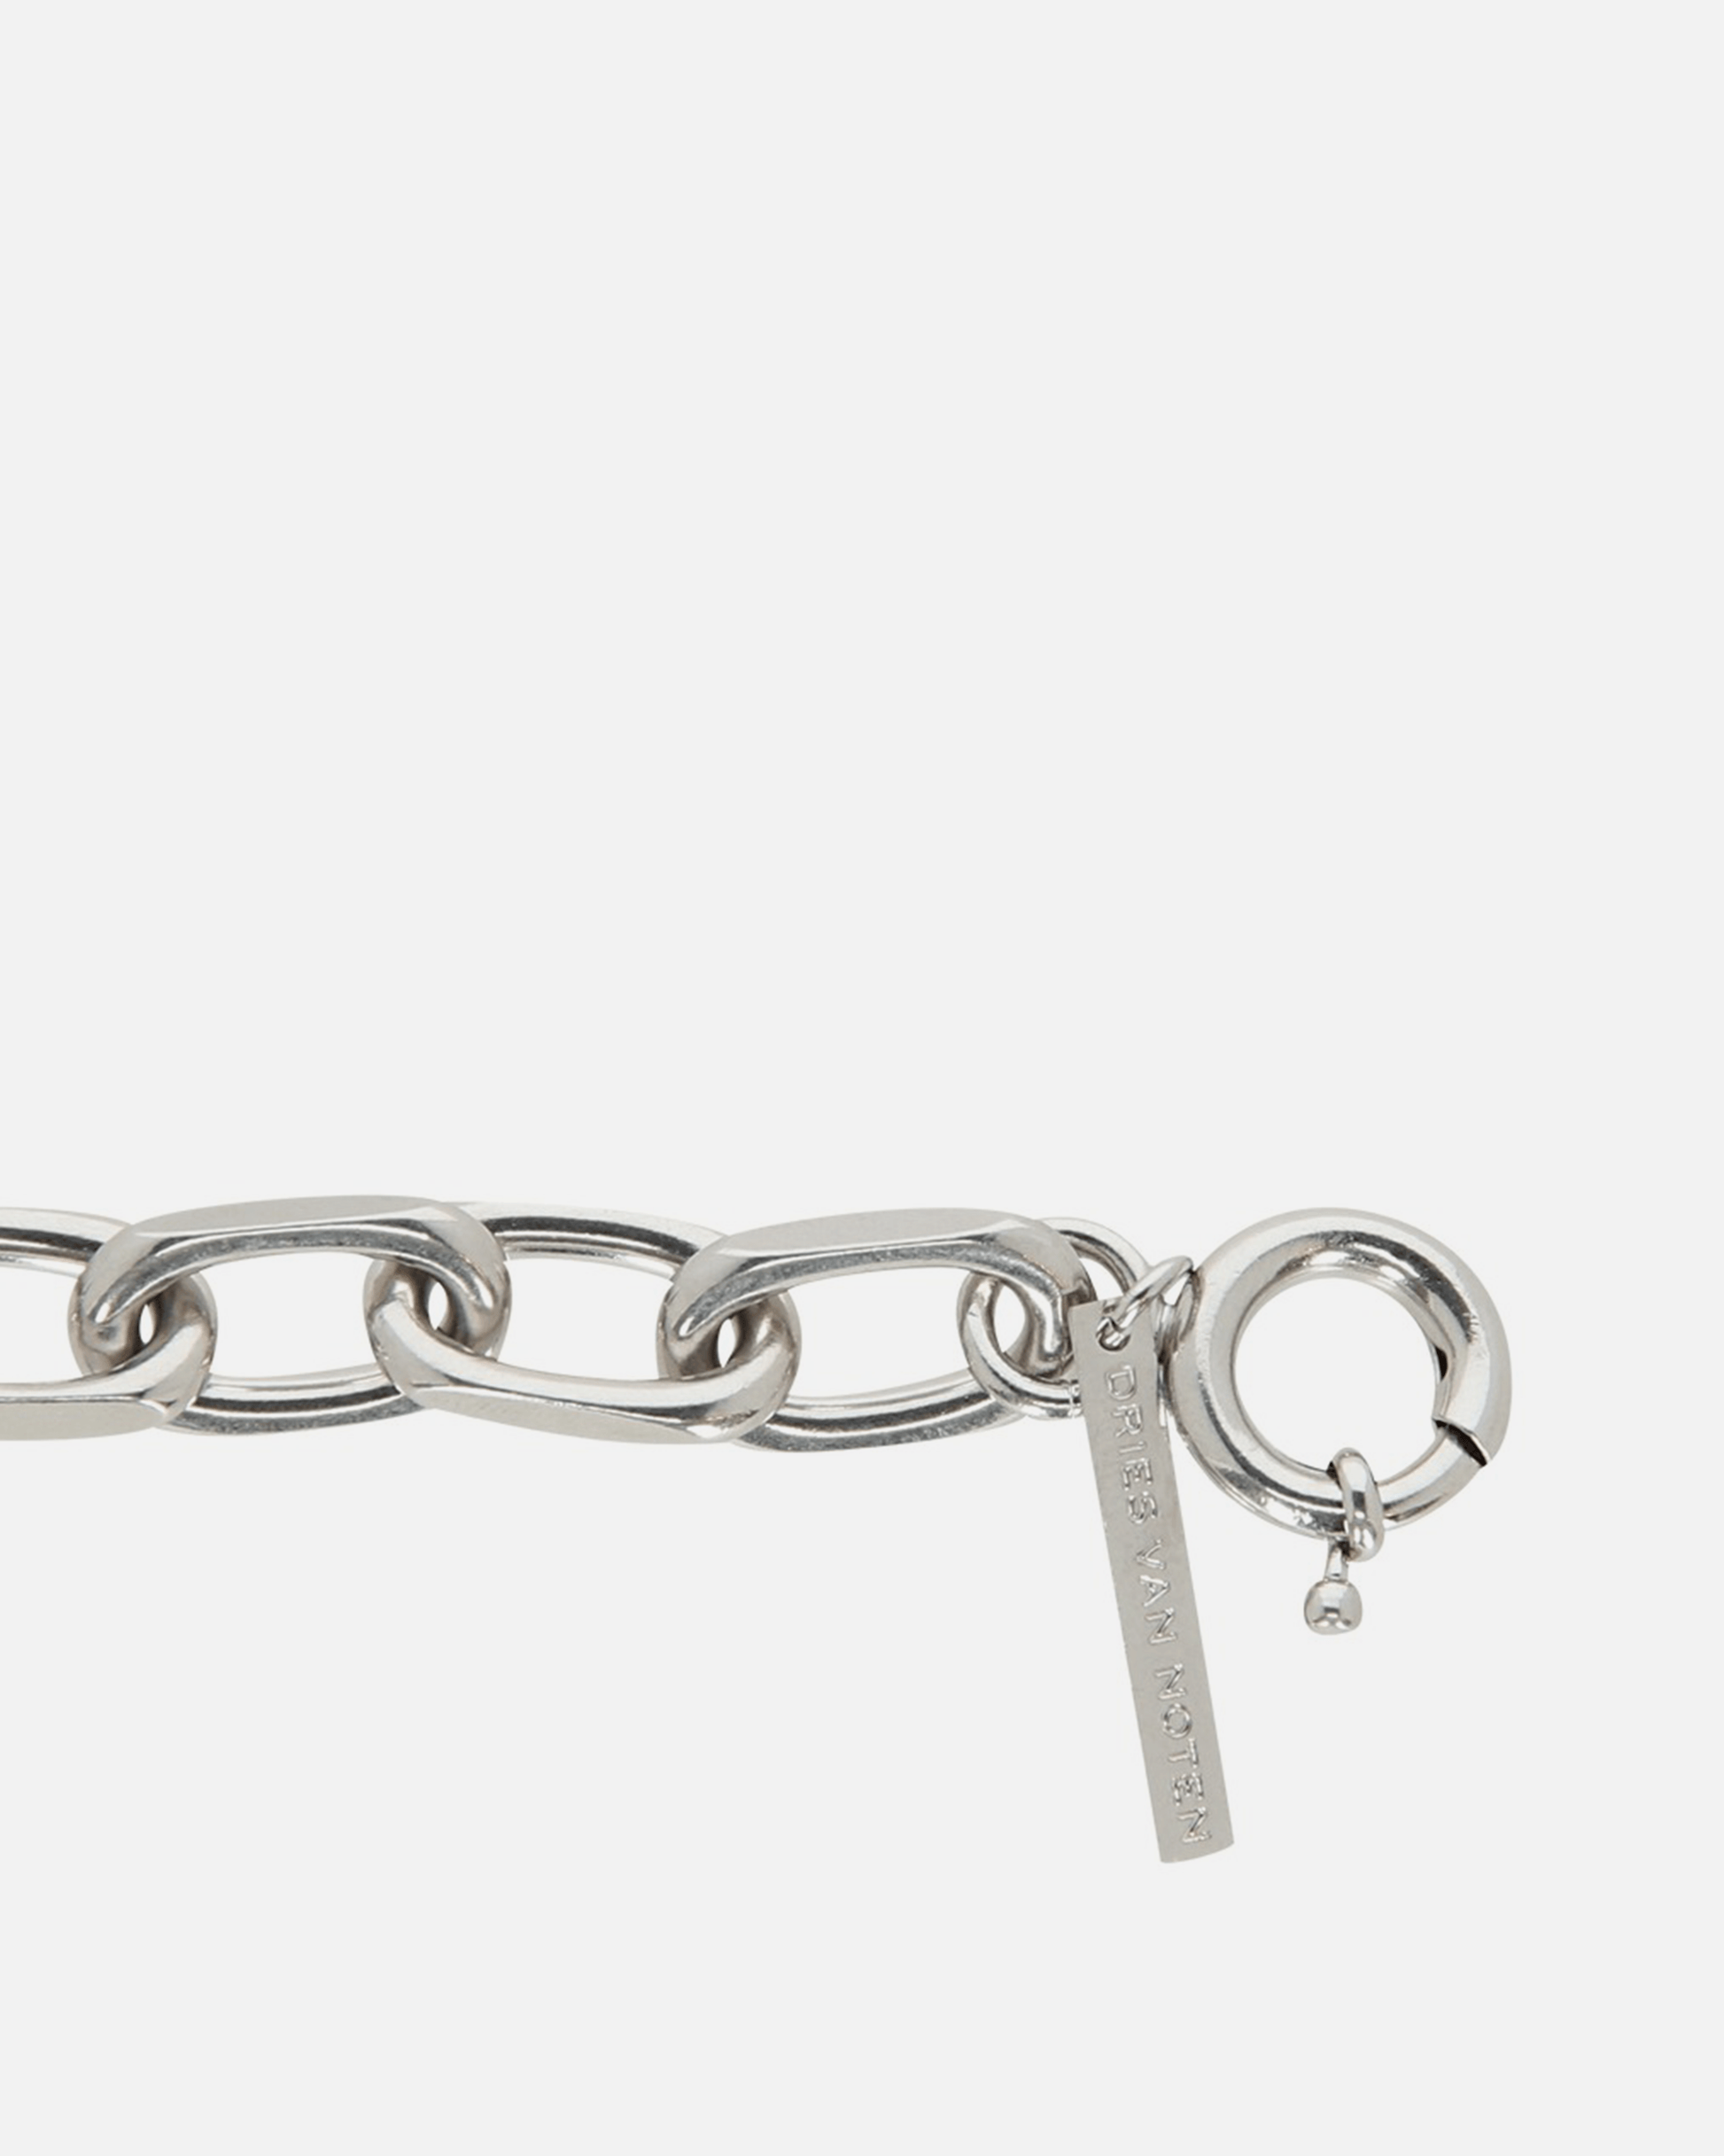 Dries Van Noten Jewelry Chain Bracelet in Silver